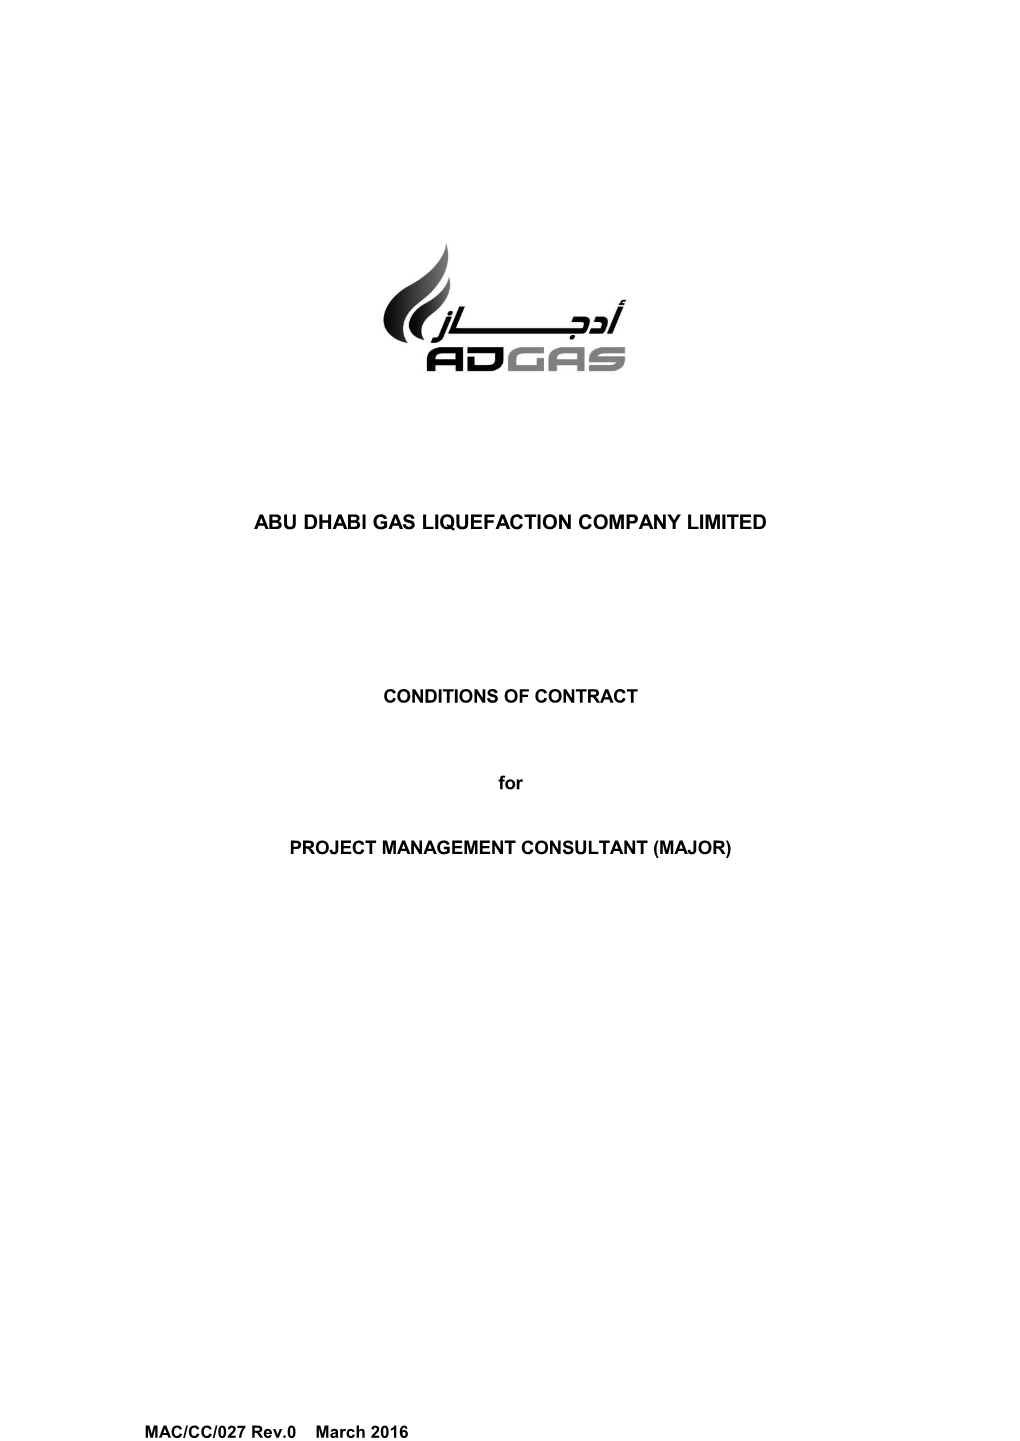 Vol B 27 - PMC Contract (Major)